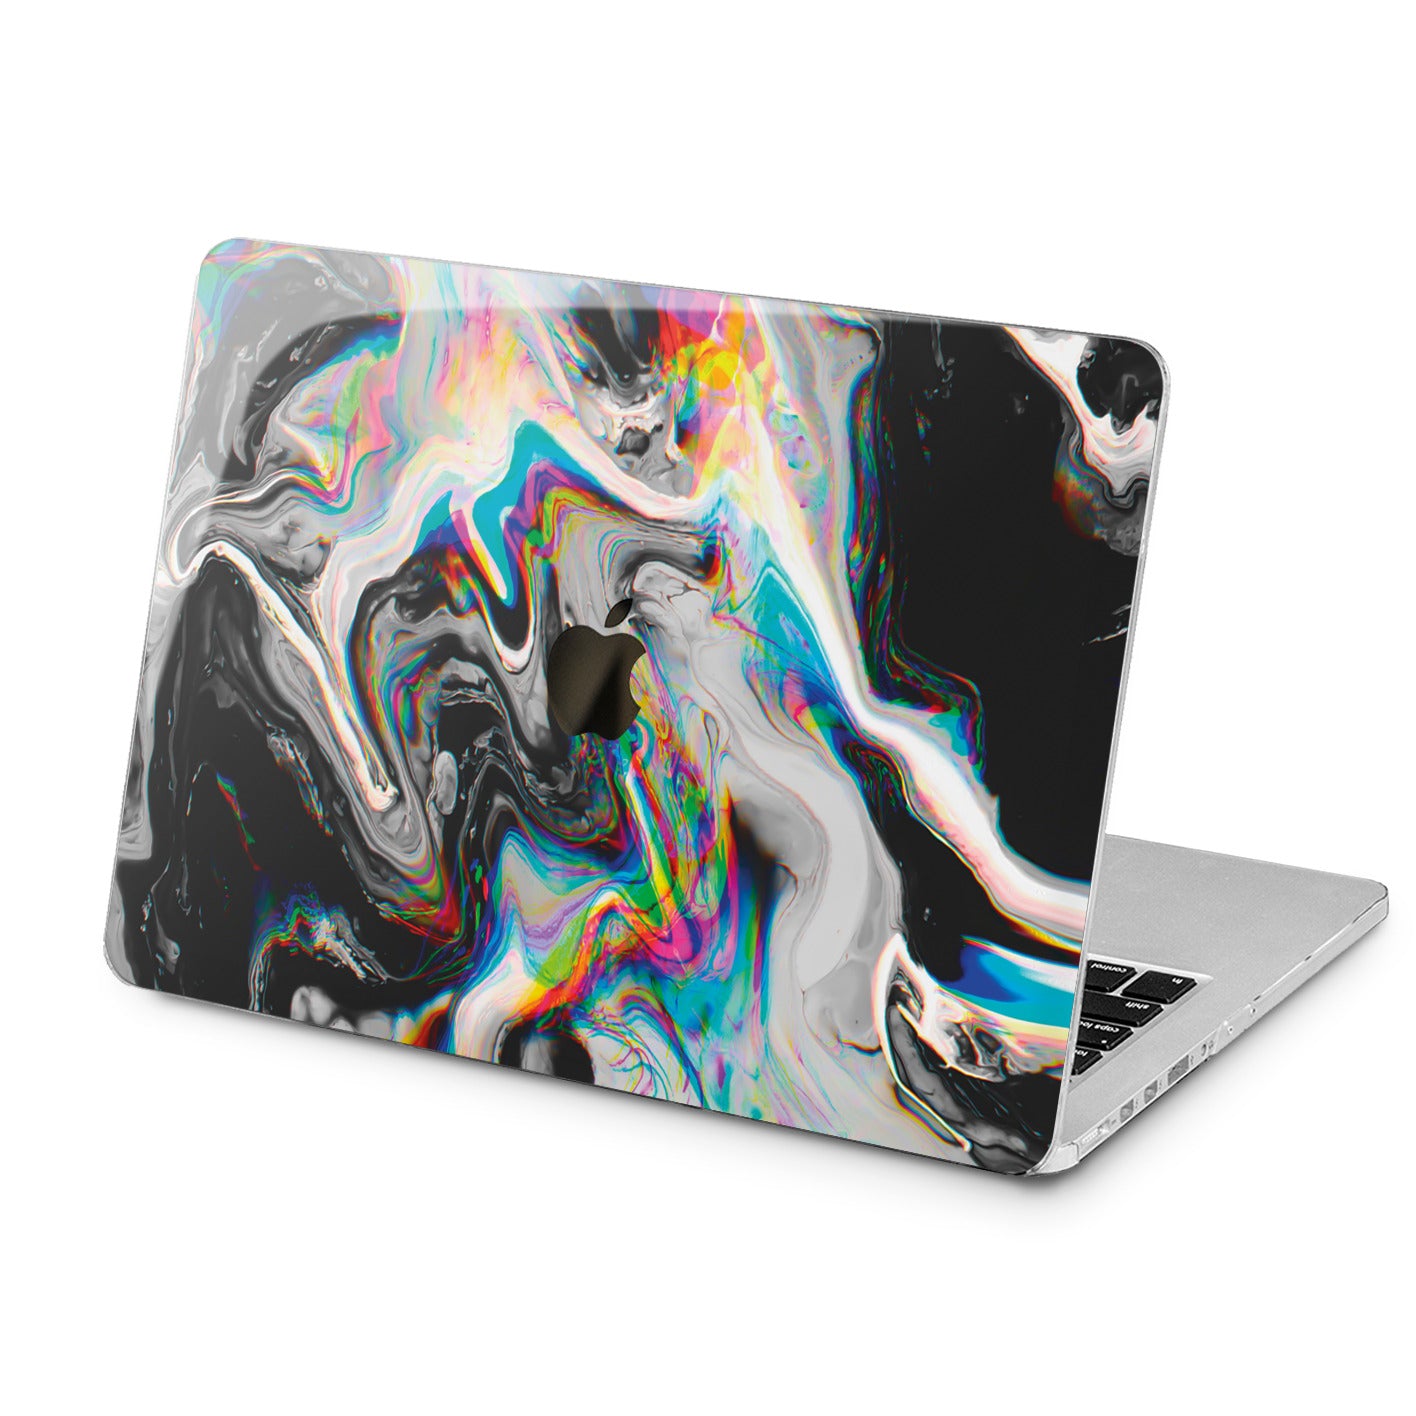 Lex Altern hard plastic case for your laptop with unique design!